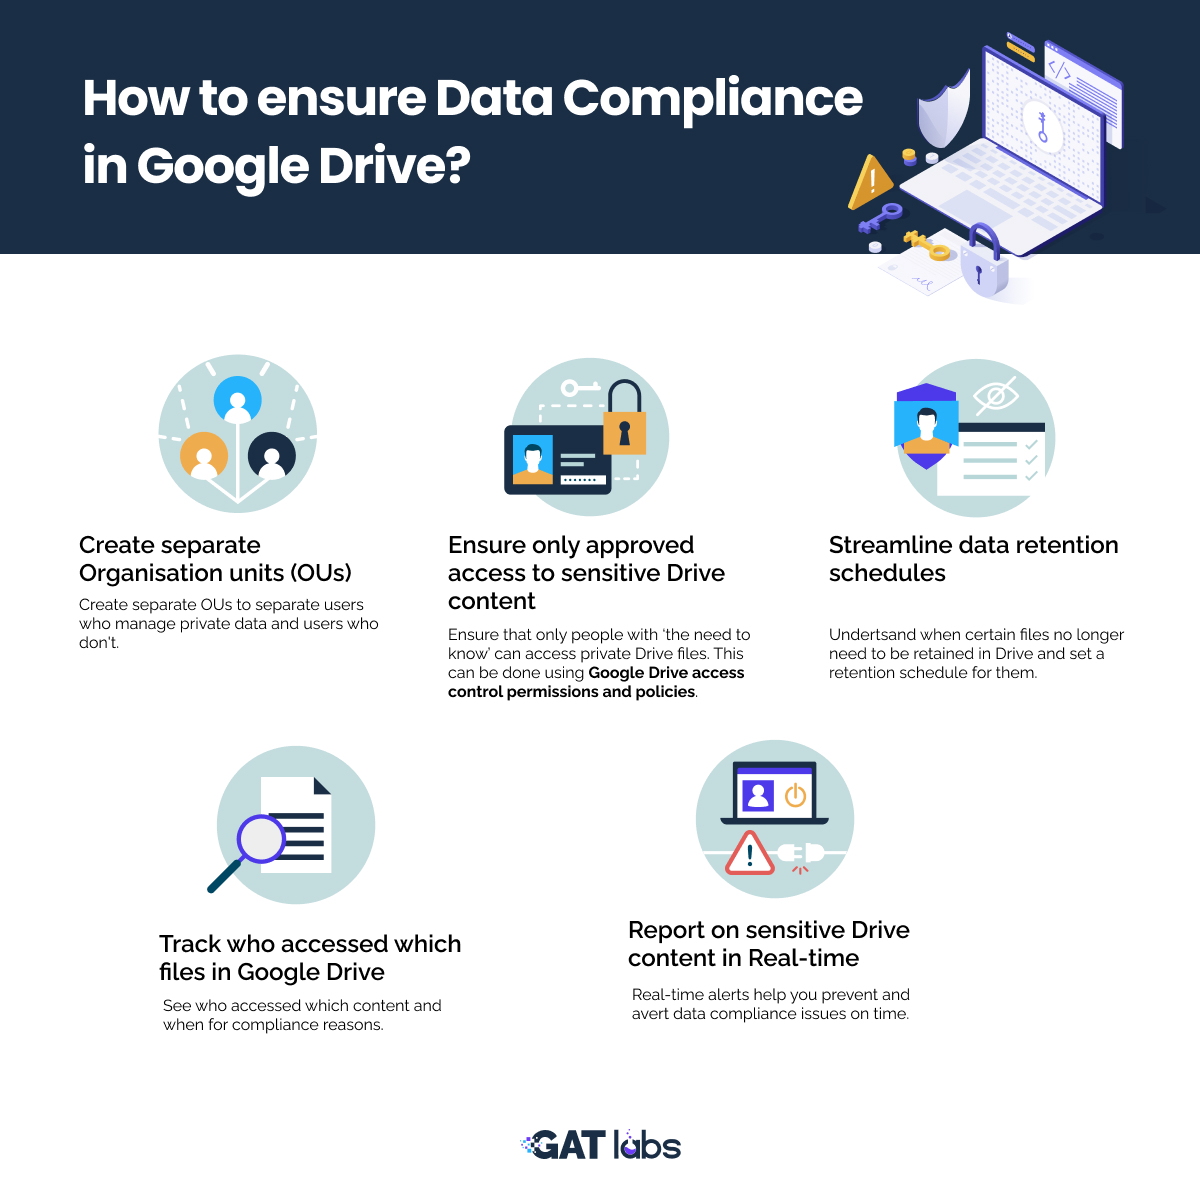 How to keep Google Drive Data Compliant?